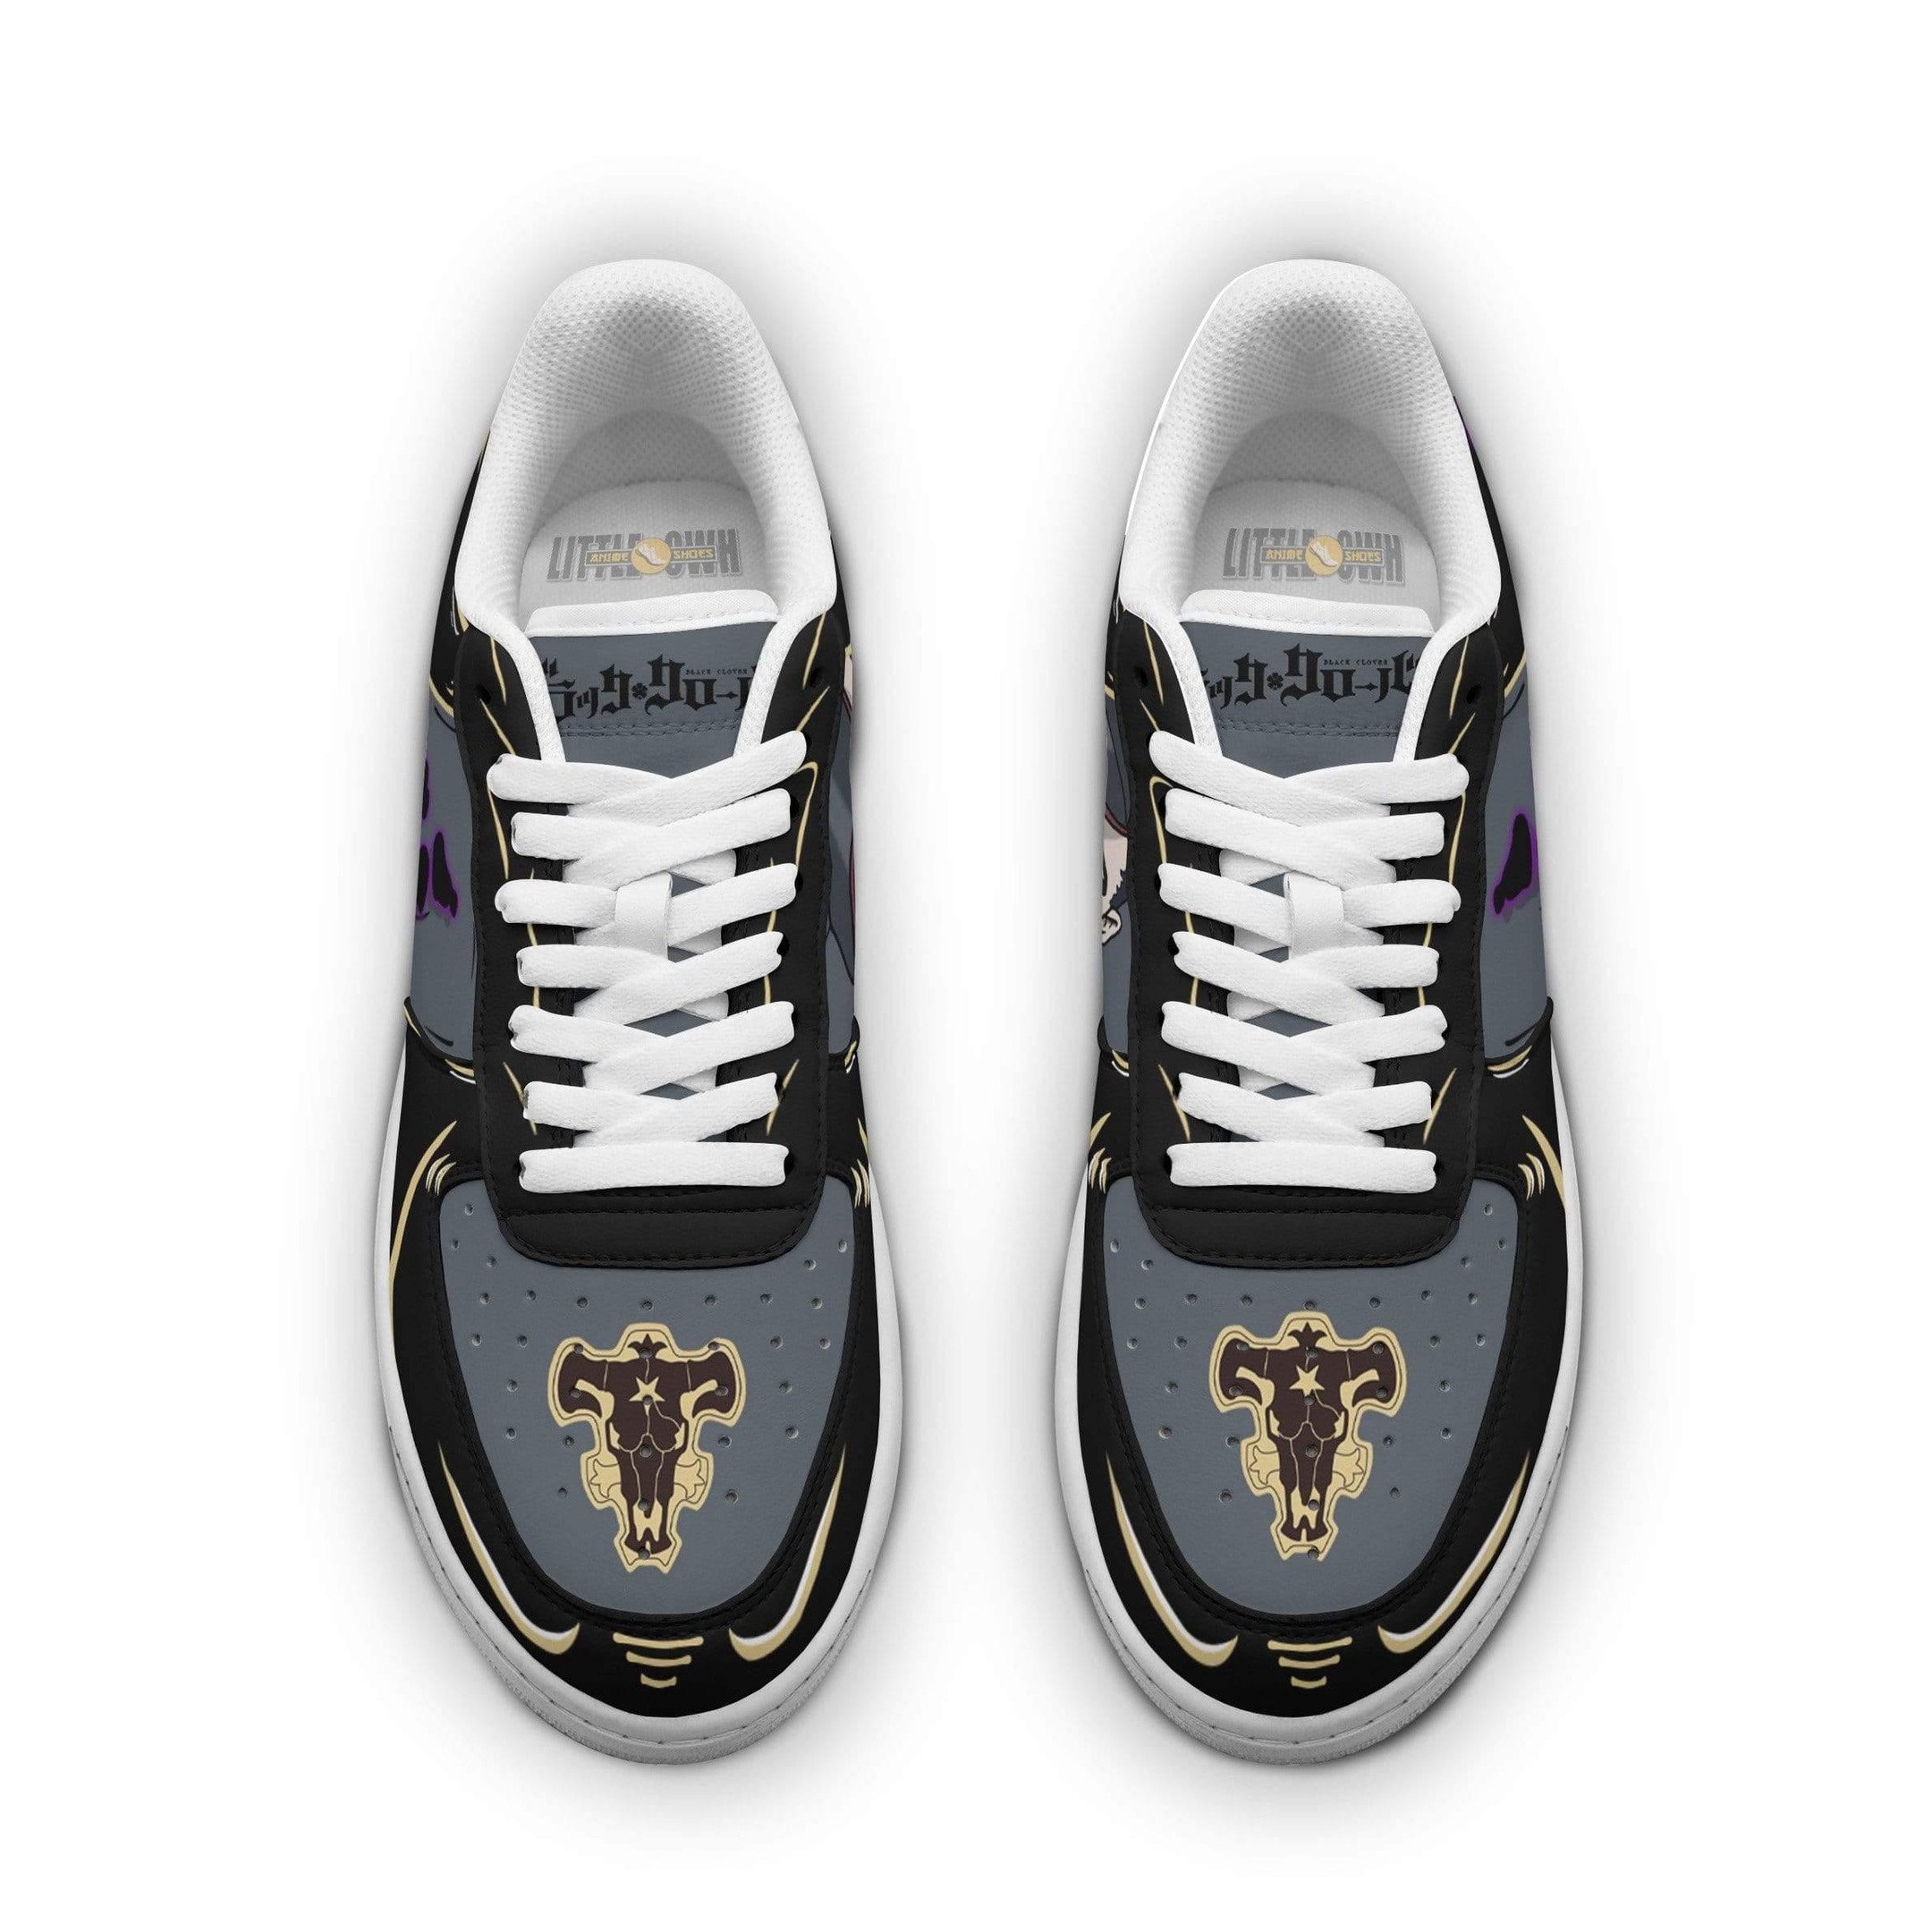 Gordon Agrippa AF Sneakers Custom Black Clover Anime Shoes - LittleOwh - 3